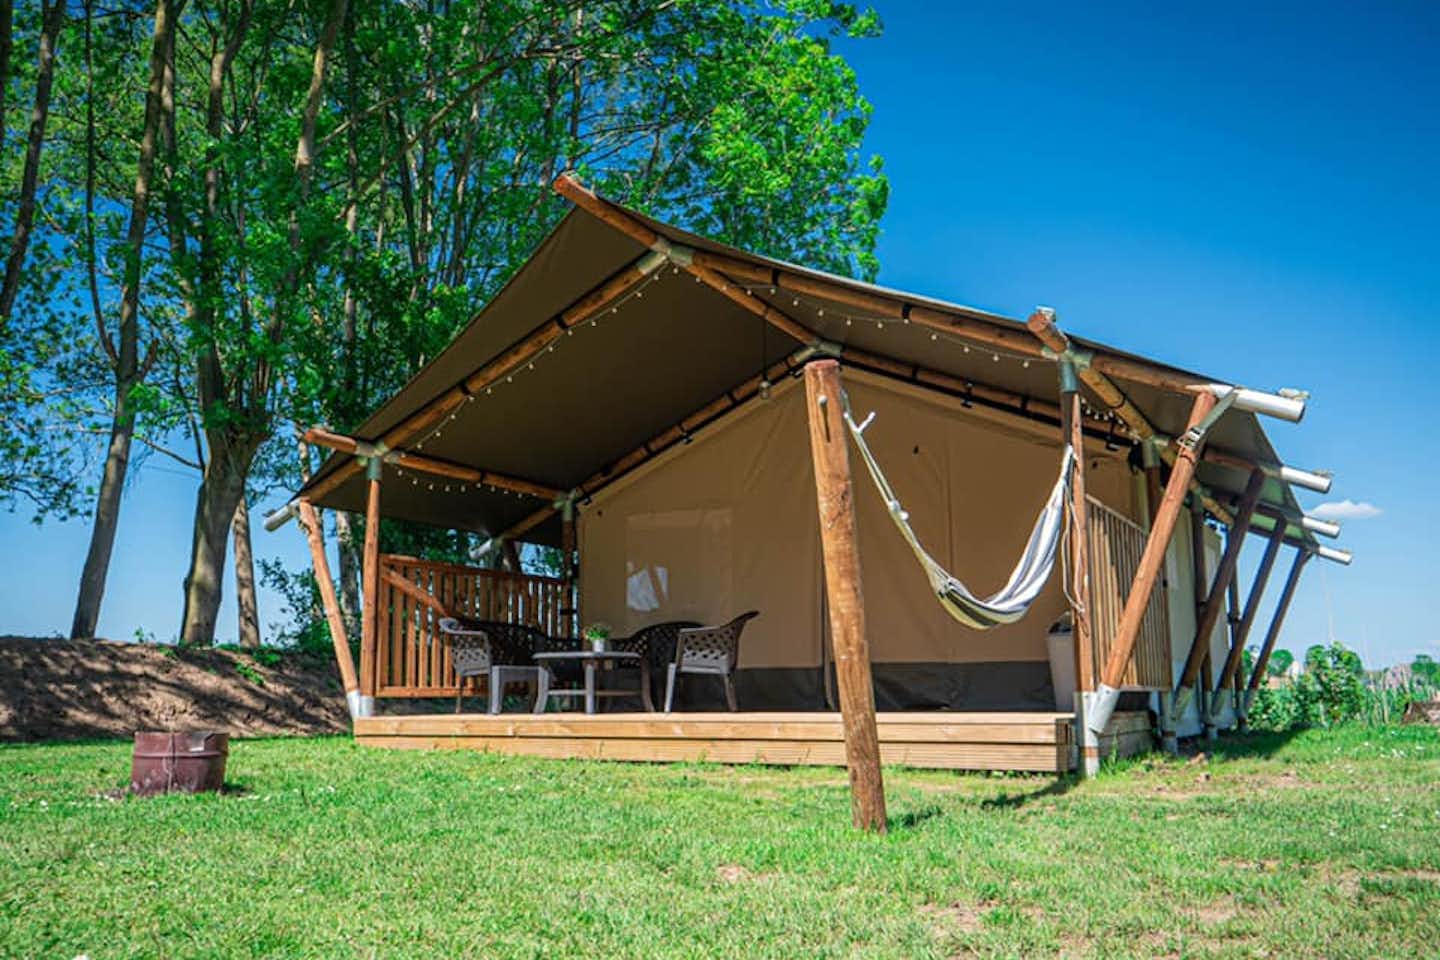 Vodatent @ Camping de Tolbrug - Glamping-Zelt mit Terrasse auf dem Campingplatz